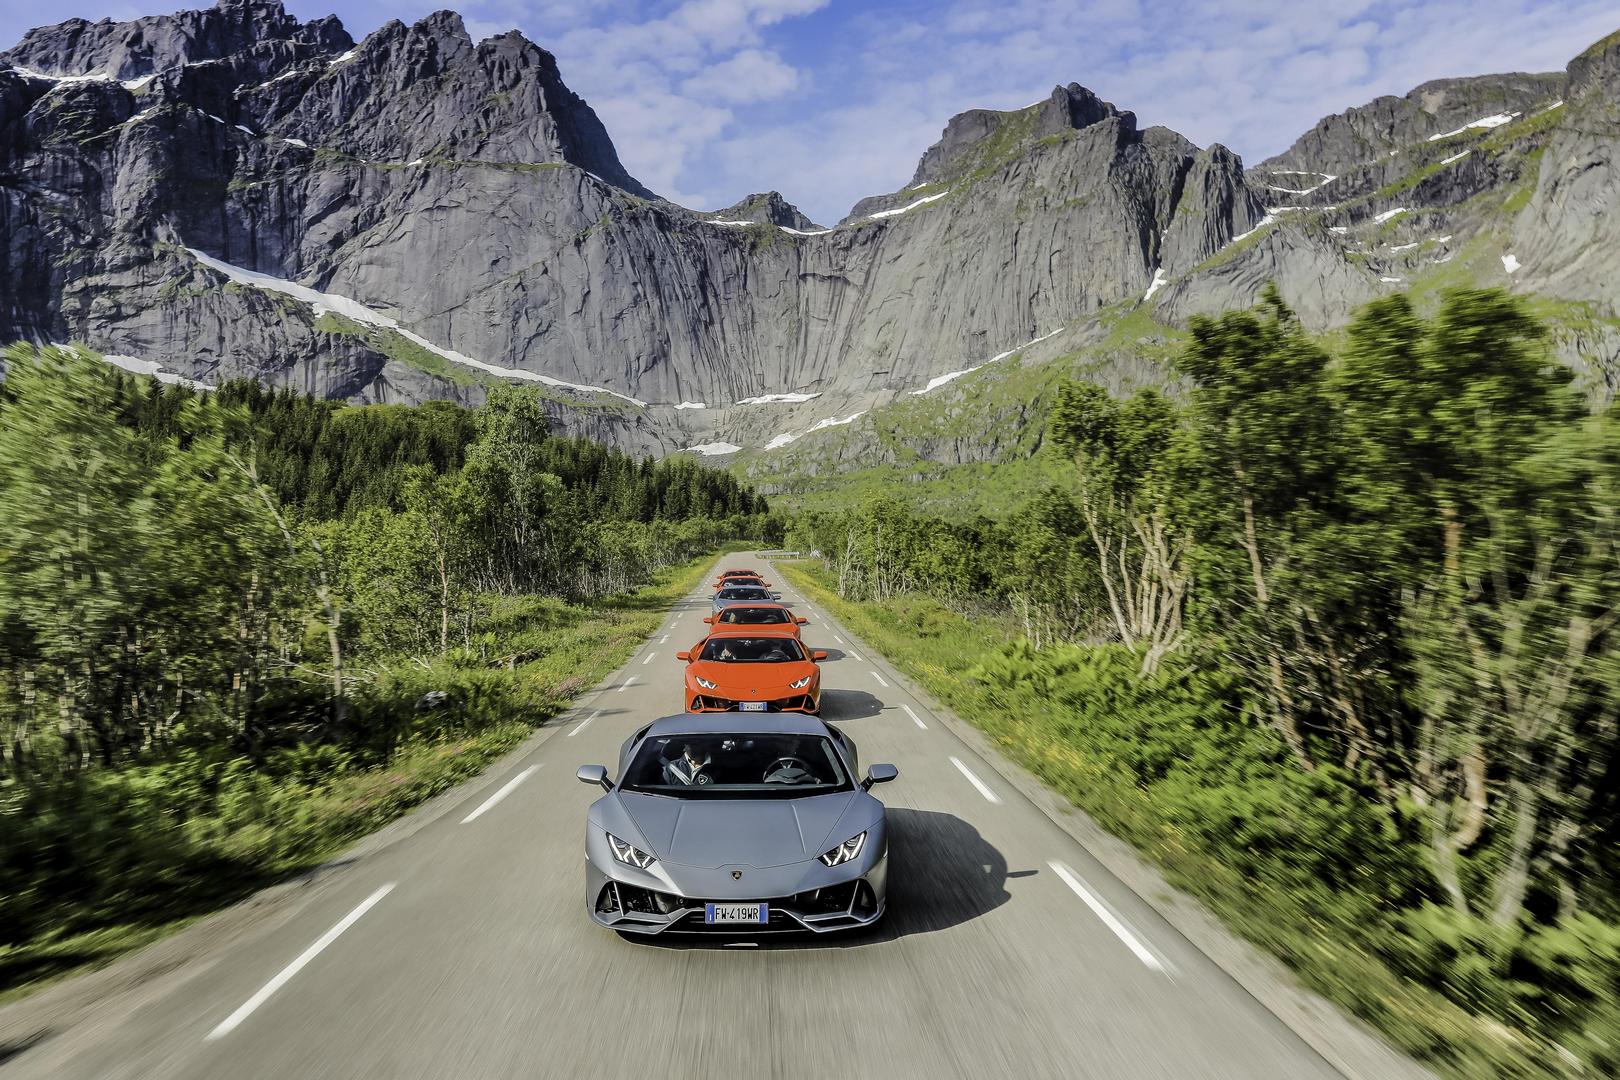 Lamborghini Huracan to Adopt Revolutionary what3words navigation